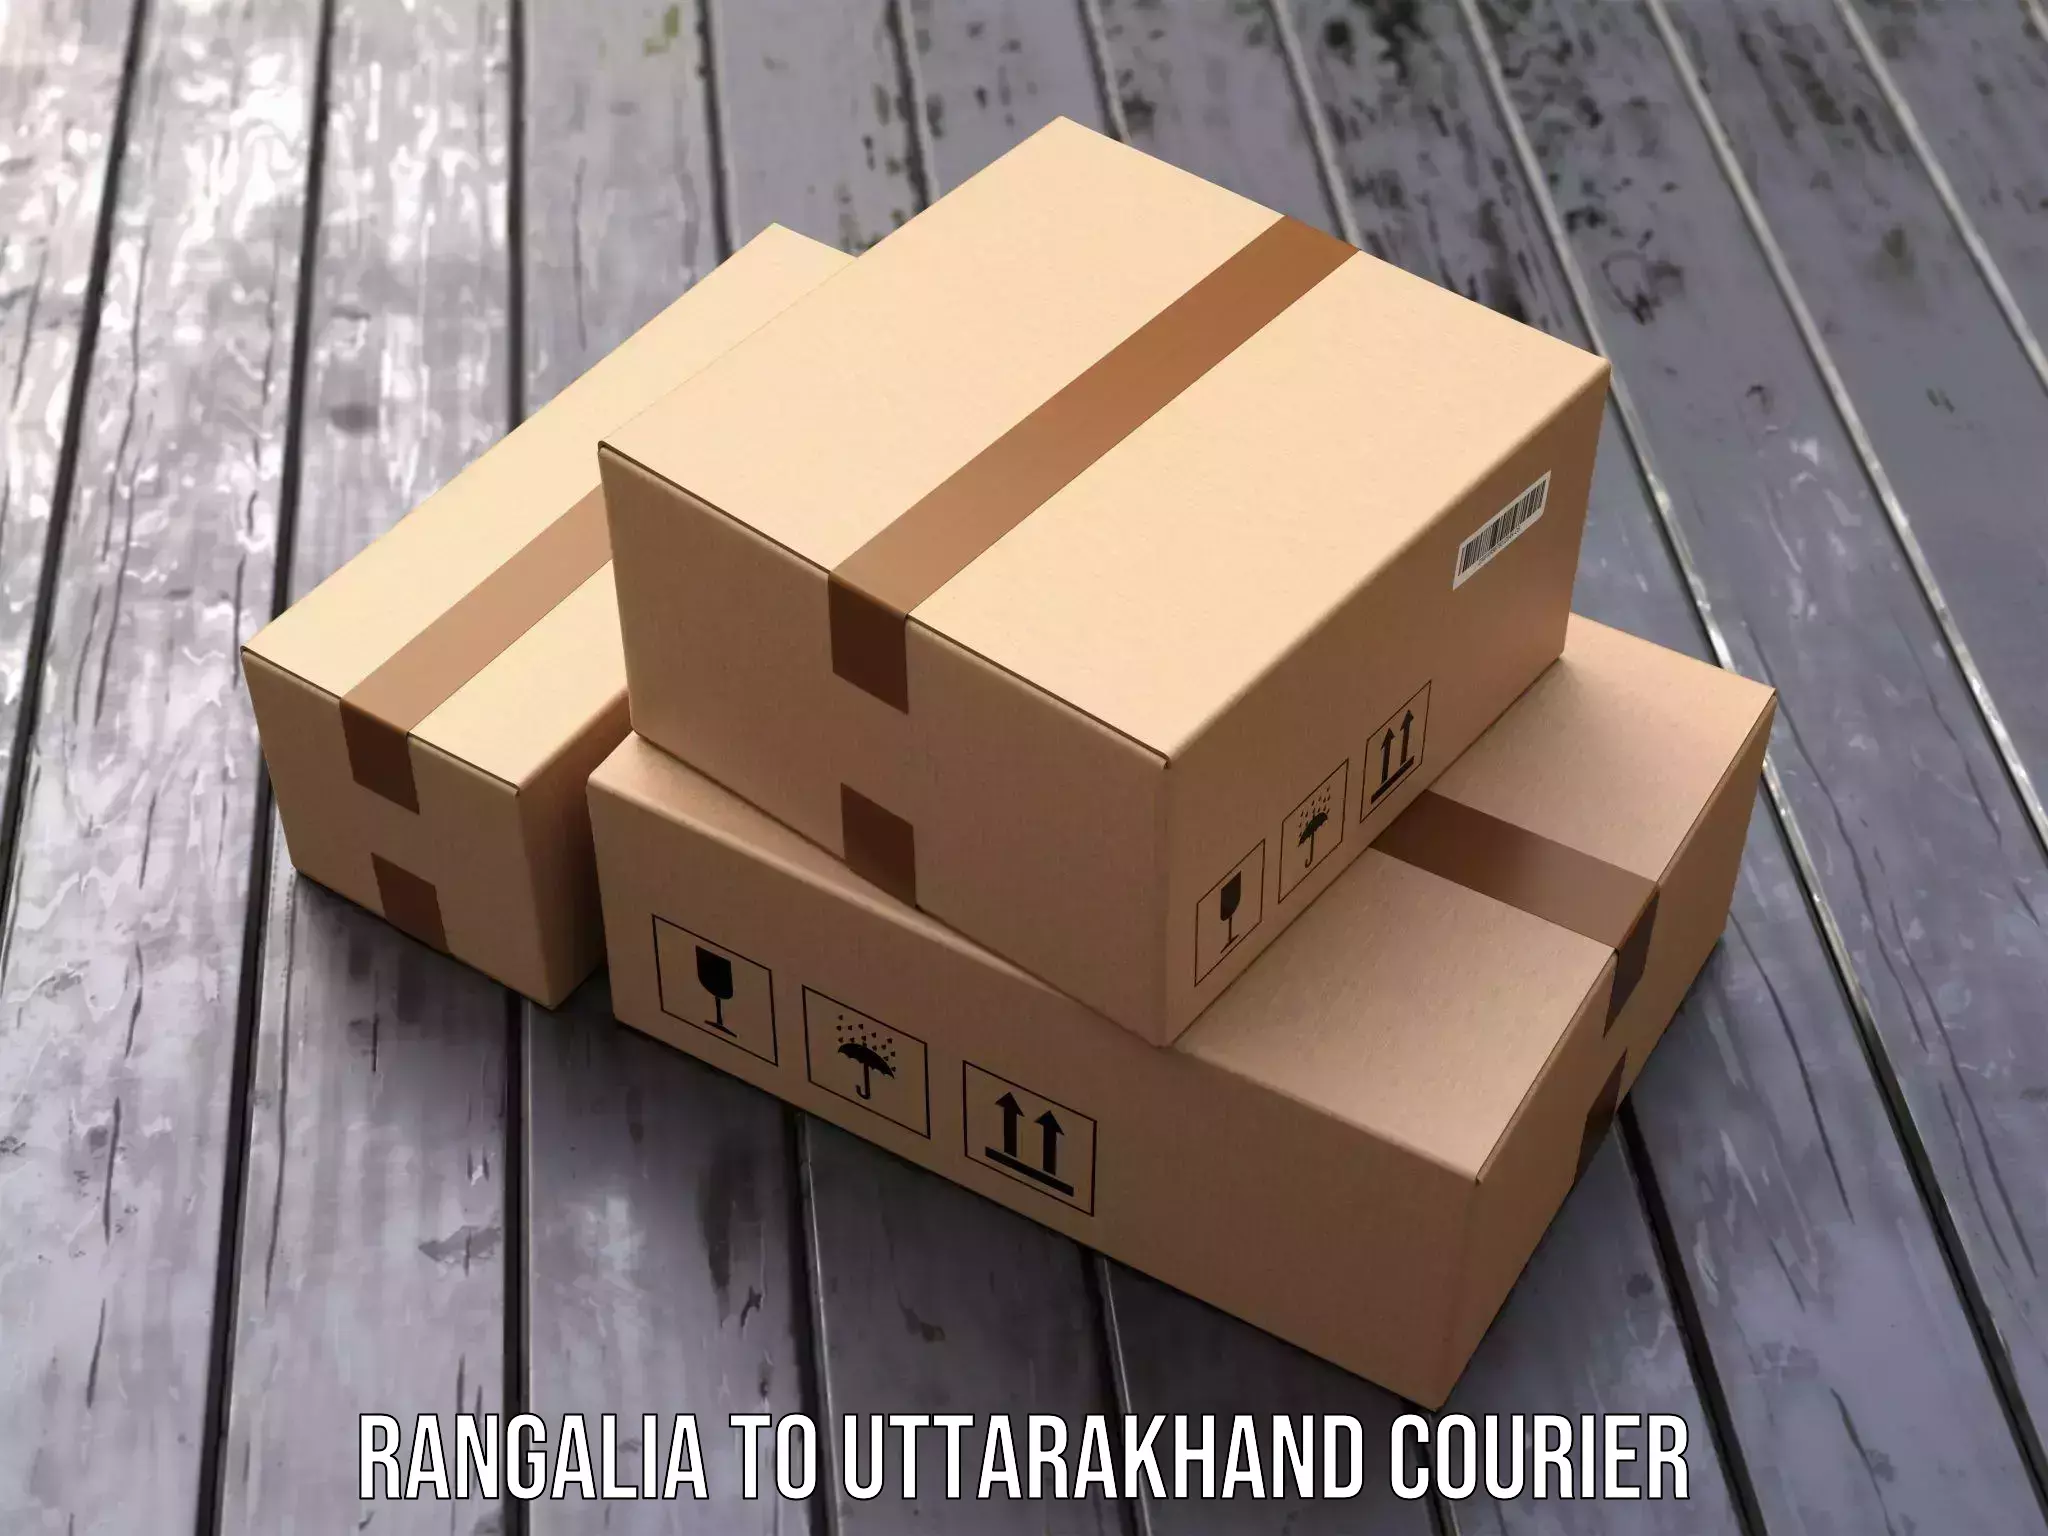 Next-day delivery options Rangalia to Bhimtal